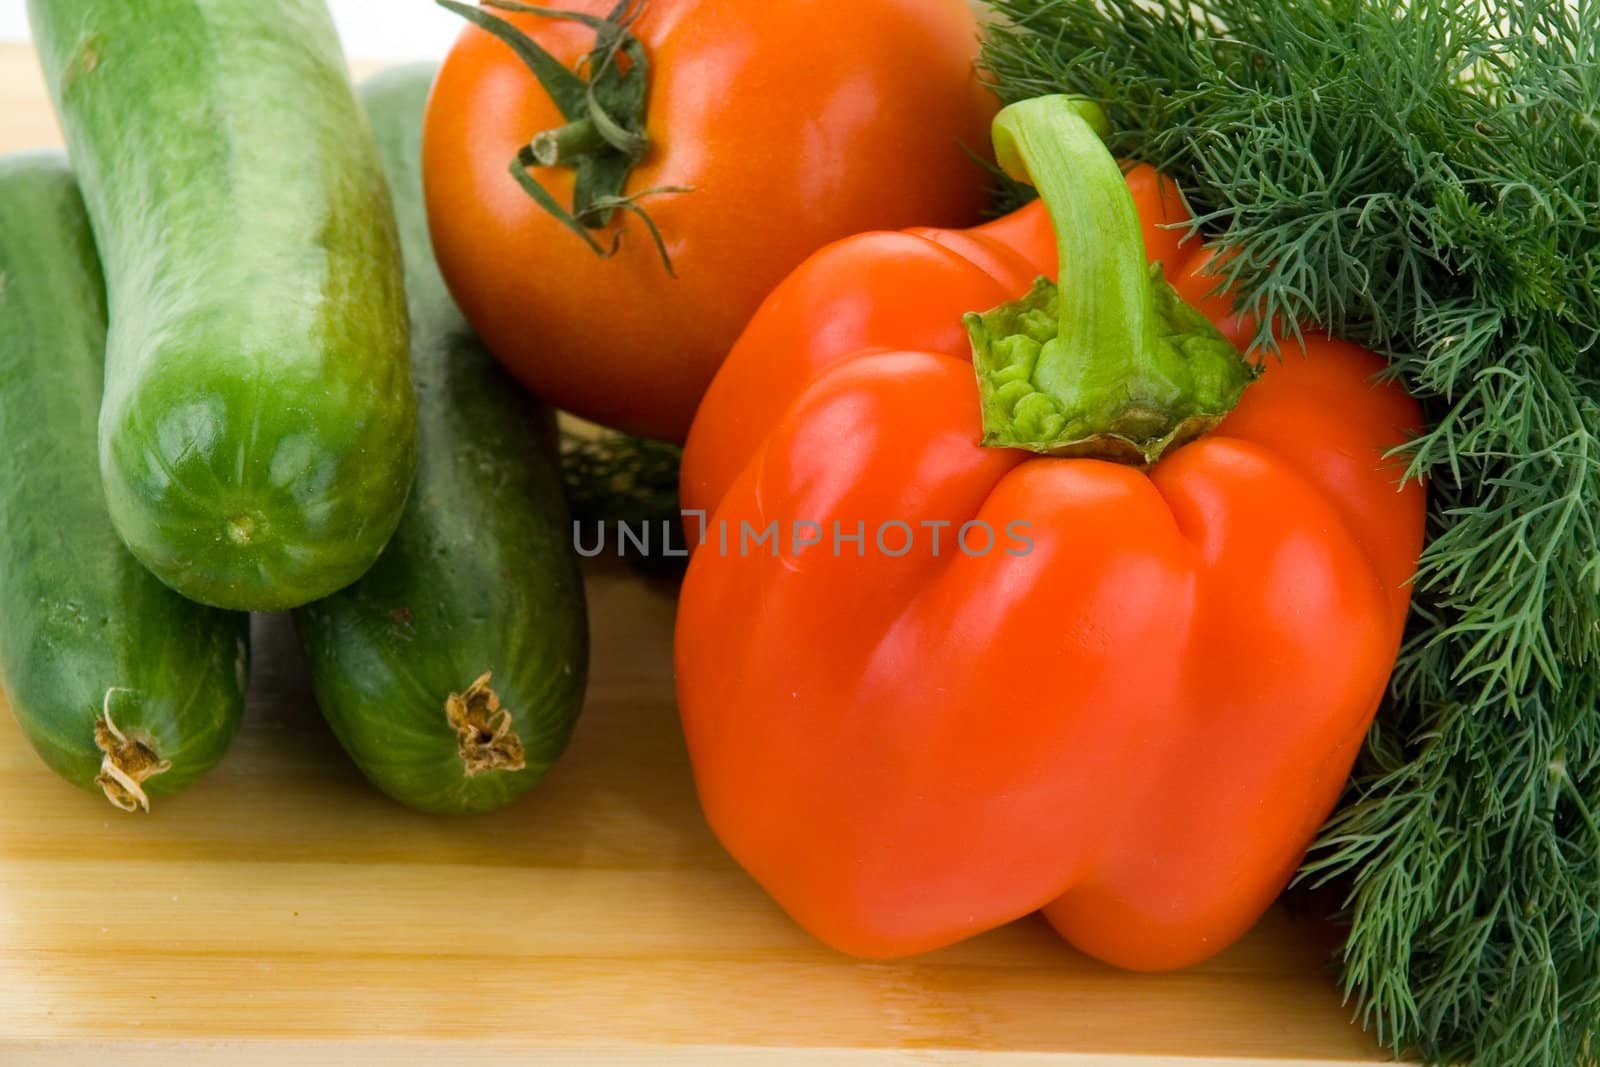 Vegetables by Vladimir